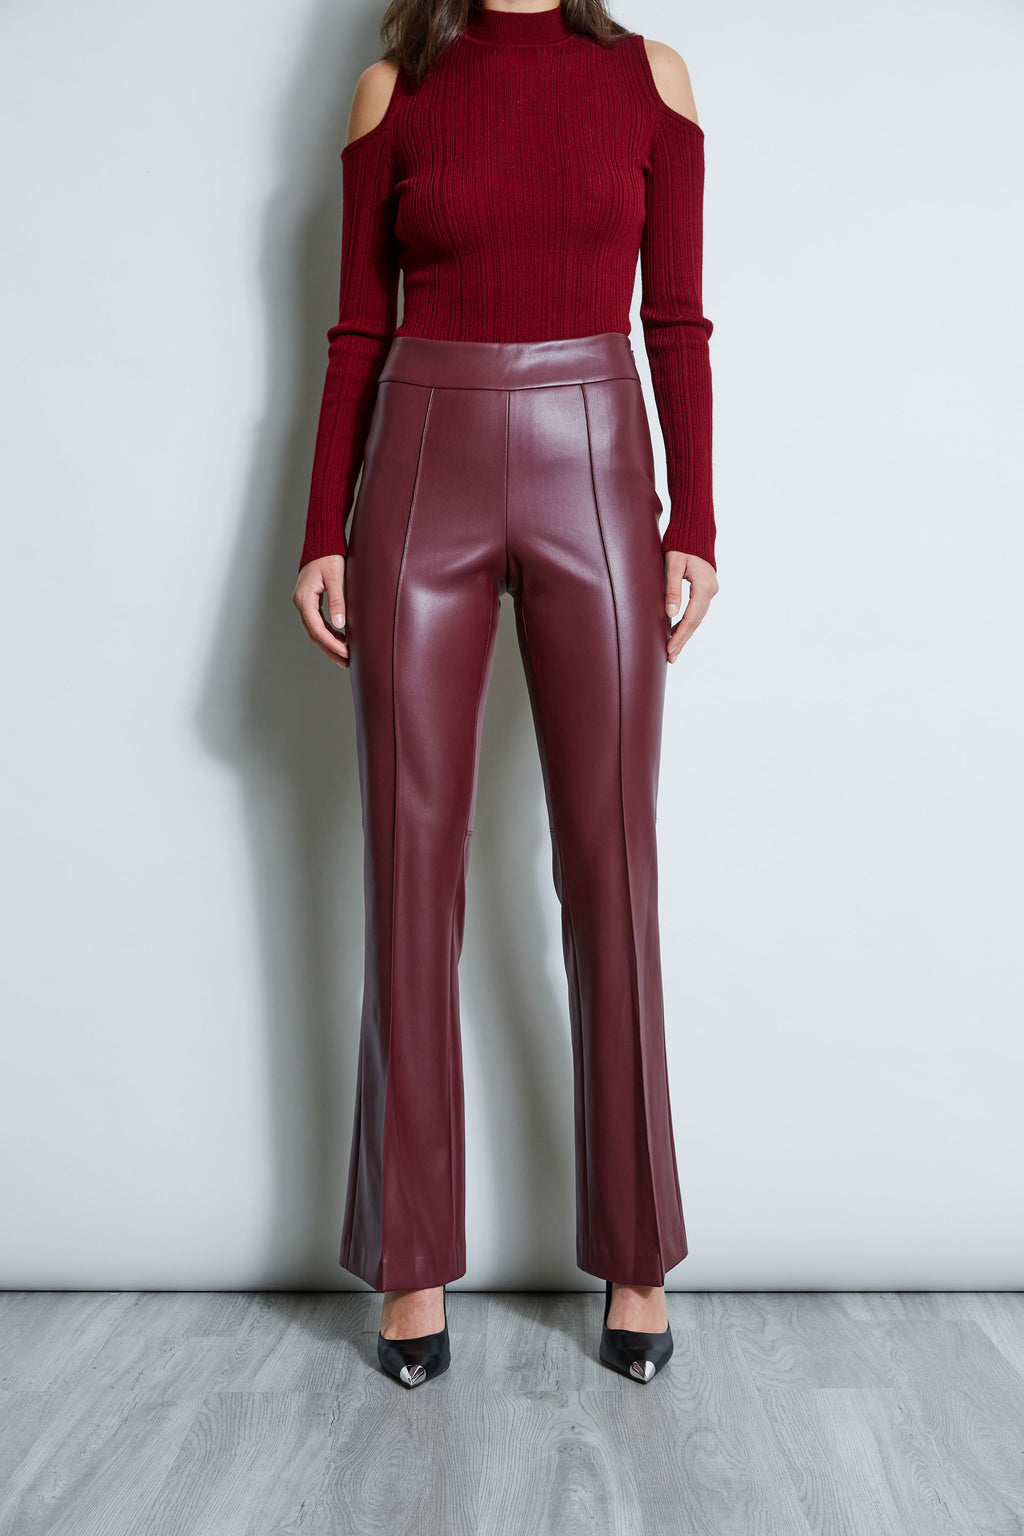 Burgundy Trousers - Vegan Leather Pants - High-Waisted Pants - Lulus